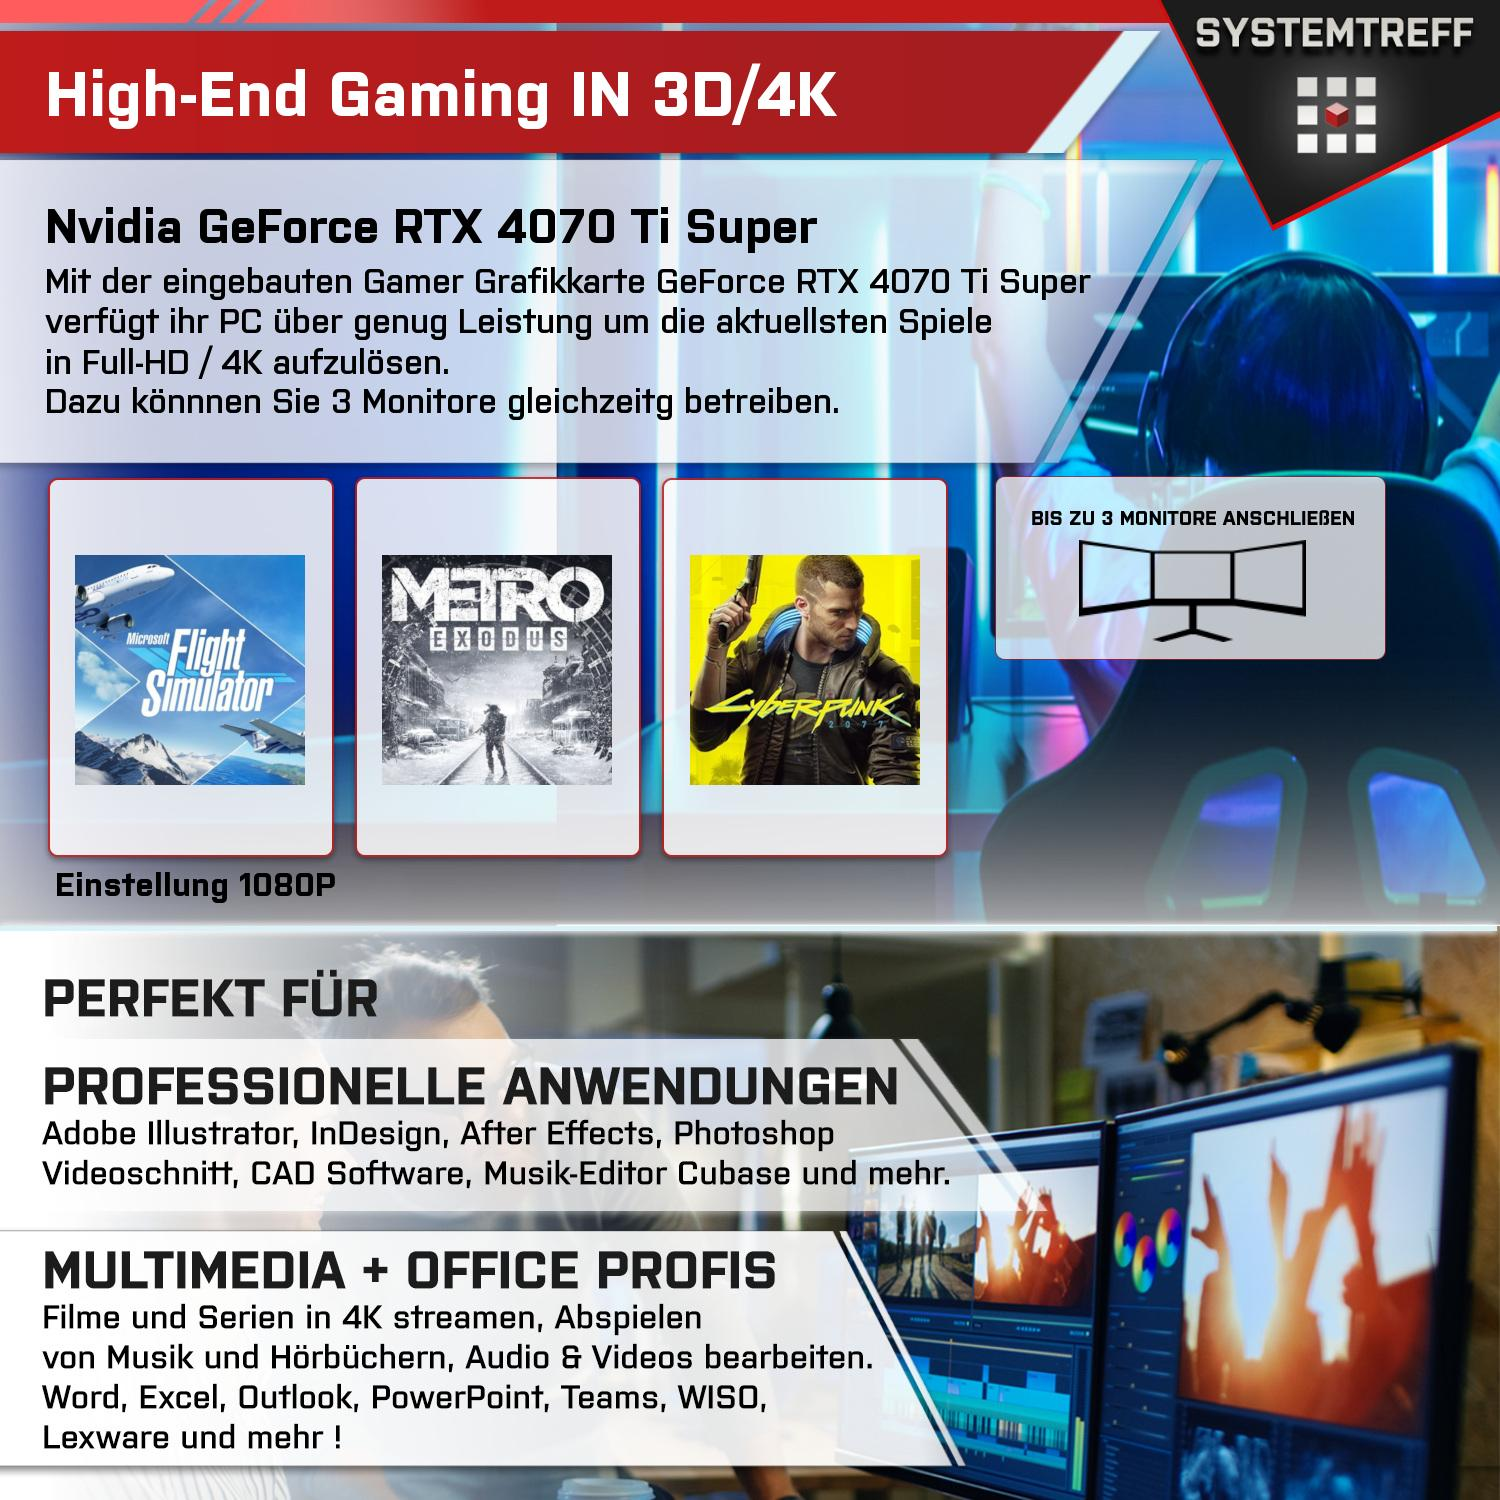 11 7 High-End AMD 7 Gaming GB Ryzen™ mSSD, 4070 NVIDIA Prozessor, Super™ PC Gaming GB AMD mit Windows 1000 Ryzen RAM, SYSTEMTREFF 32 Pro, RTX™ 7700X, GeForce Ti